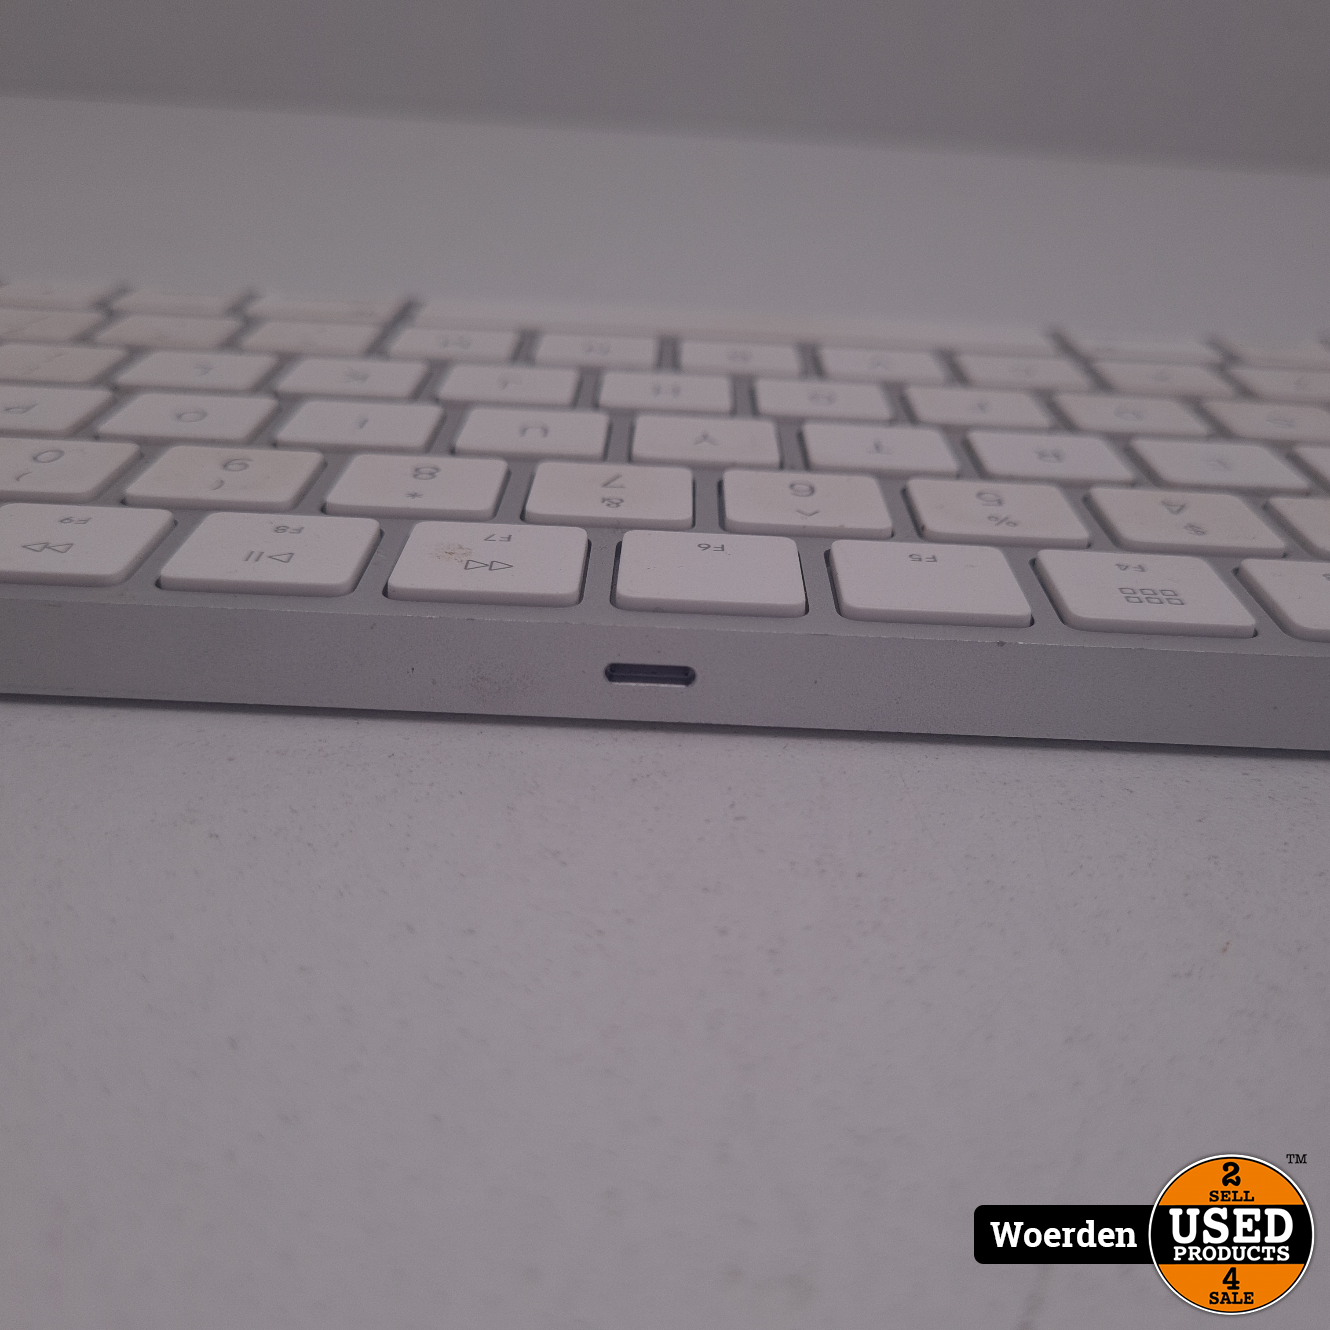 Oneerlijkheid commando Augment Apple Magic Keyboard Draadloos Toetsenbord met Garantie - Used Products  Woerden